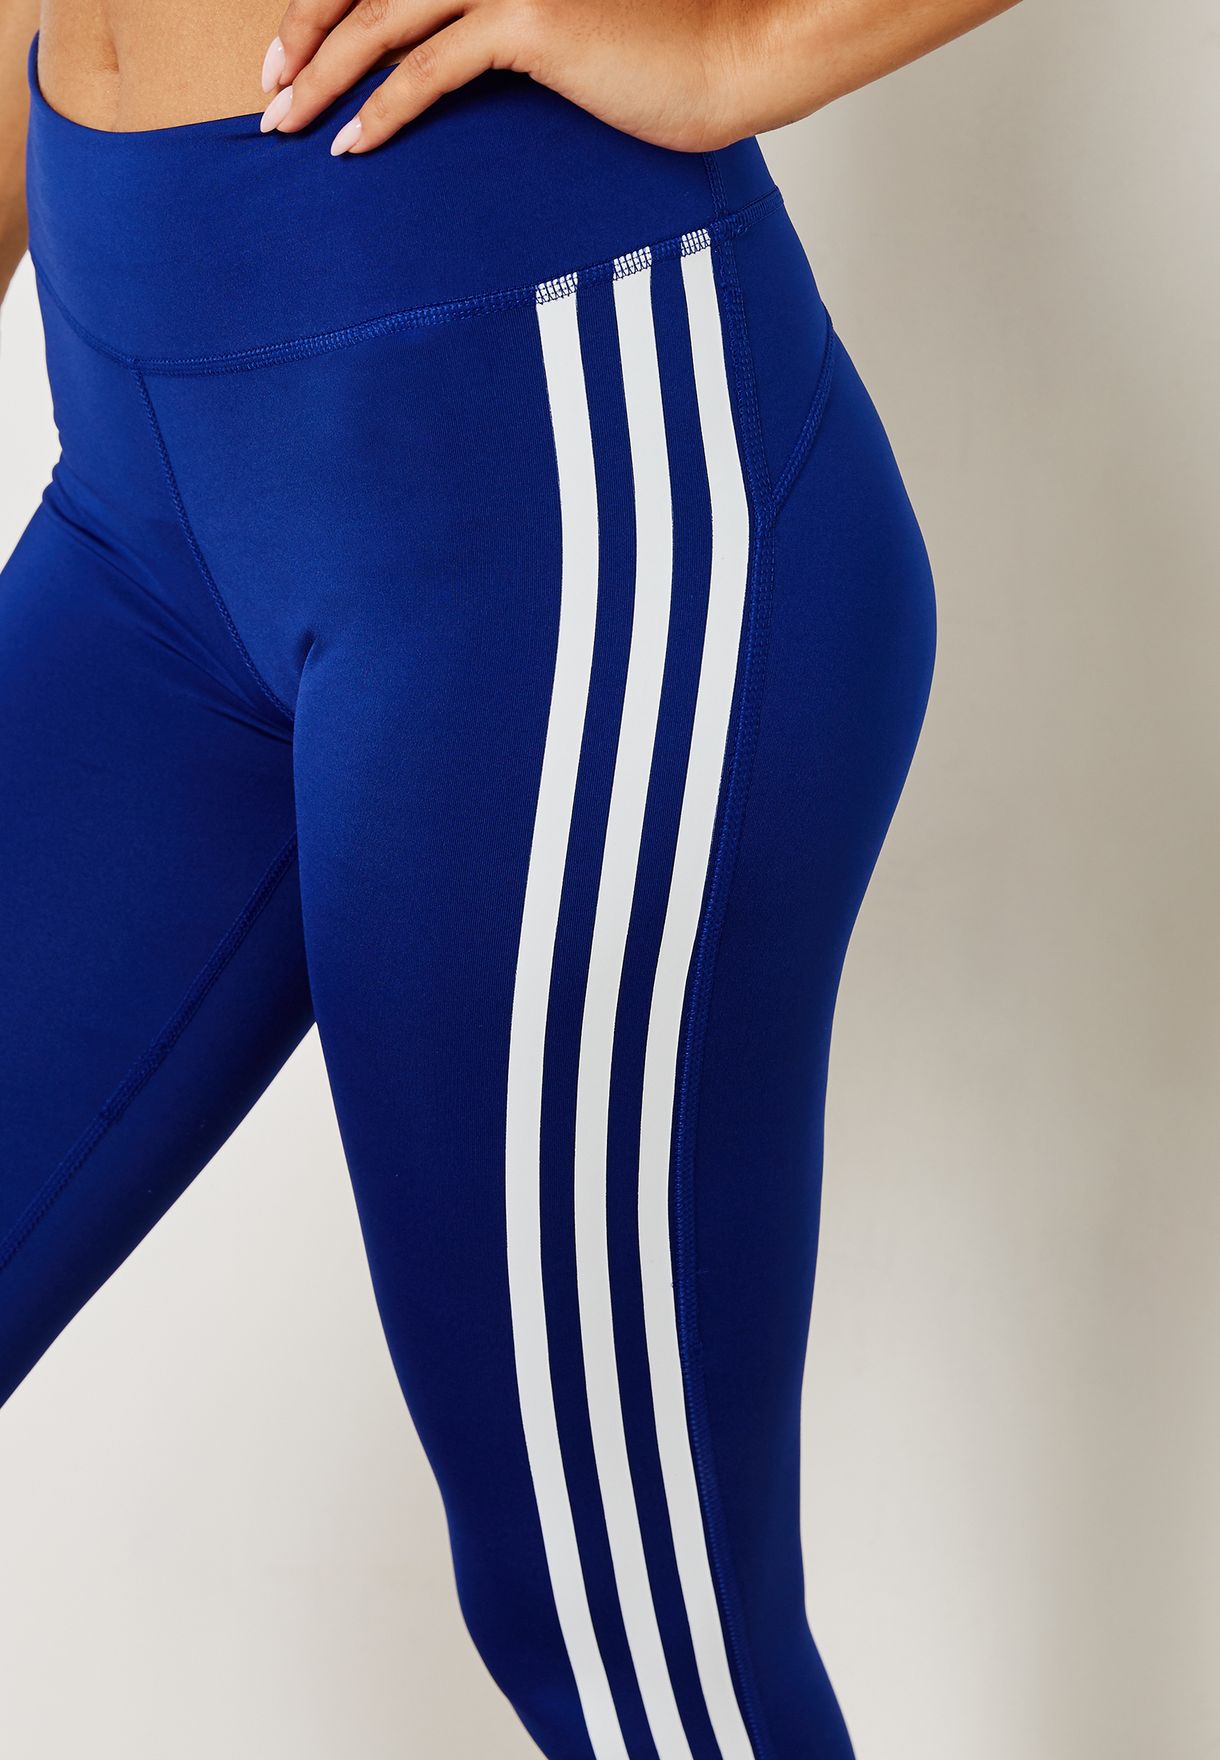 blue adidas leggings 3 stripes